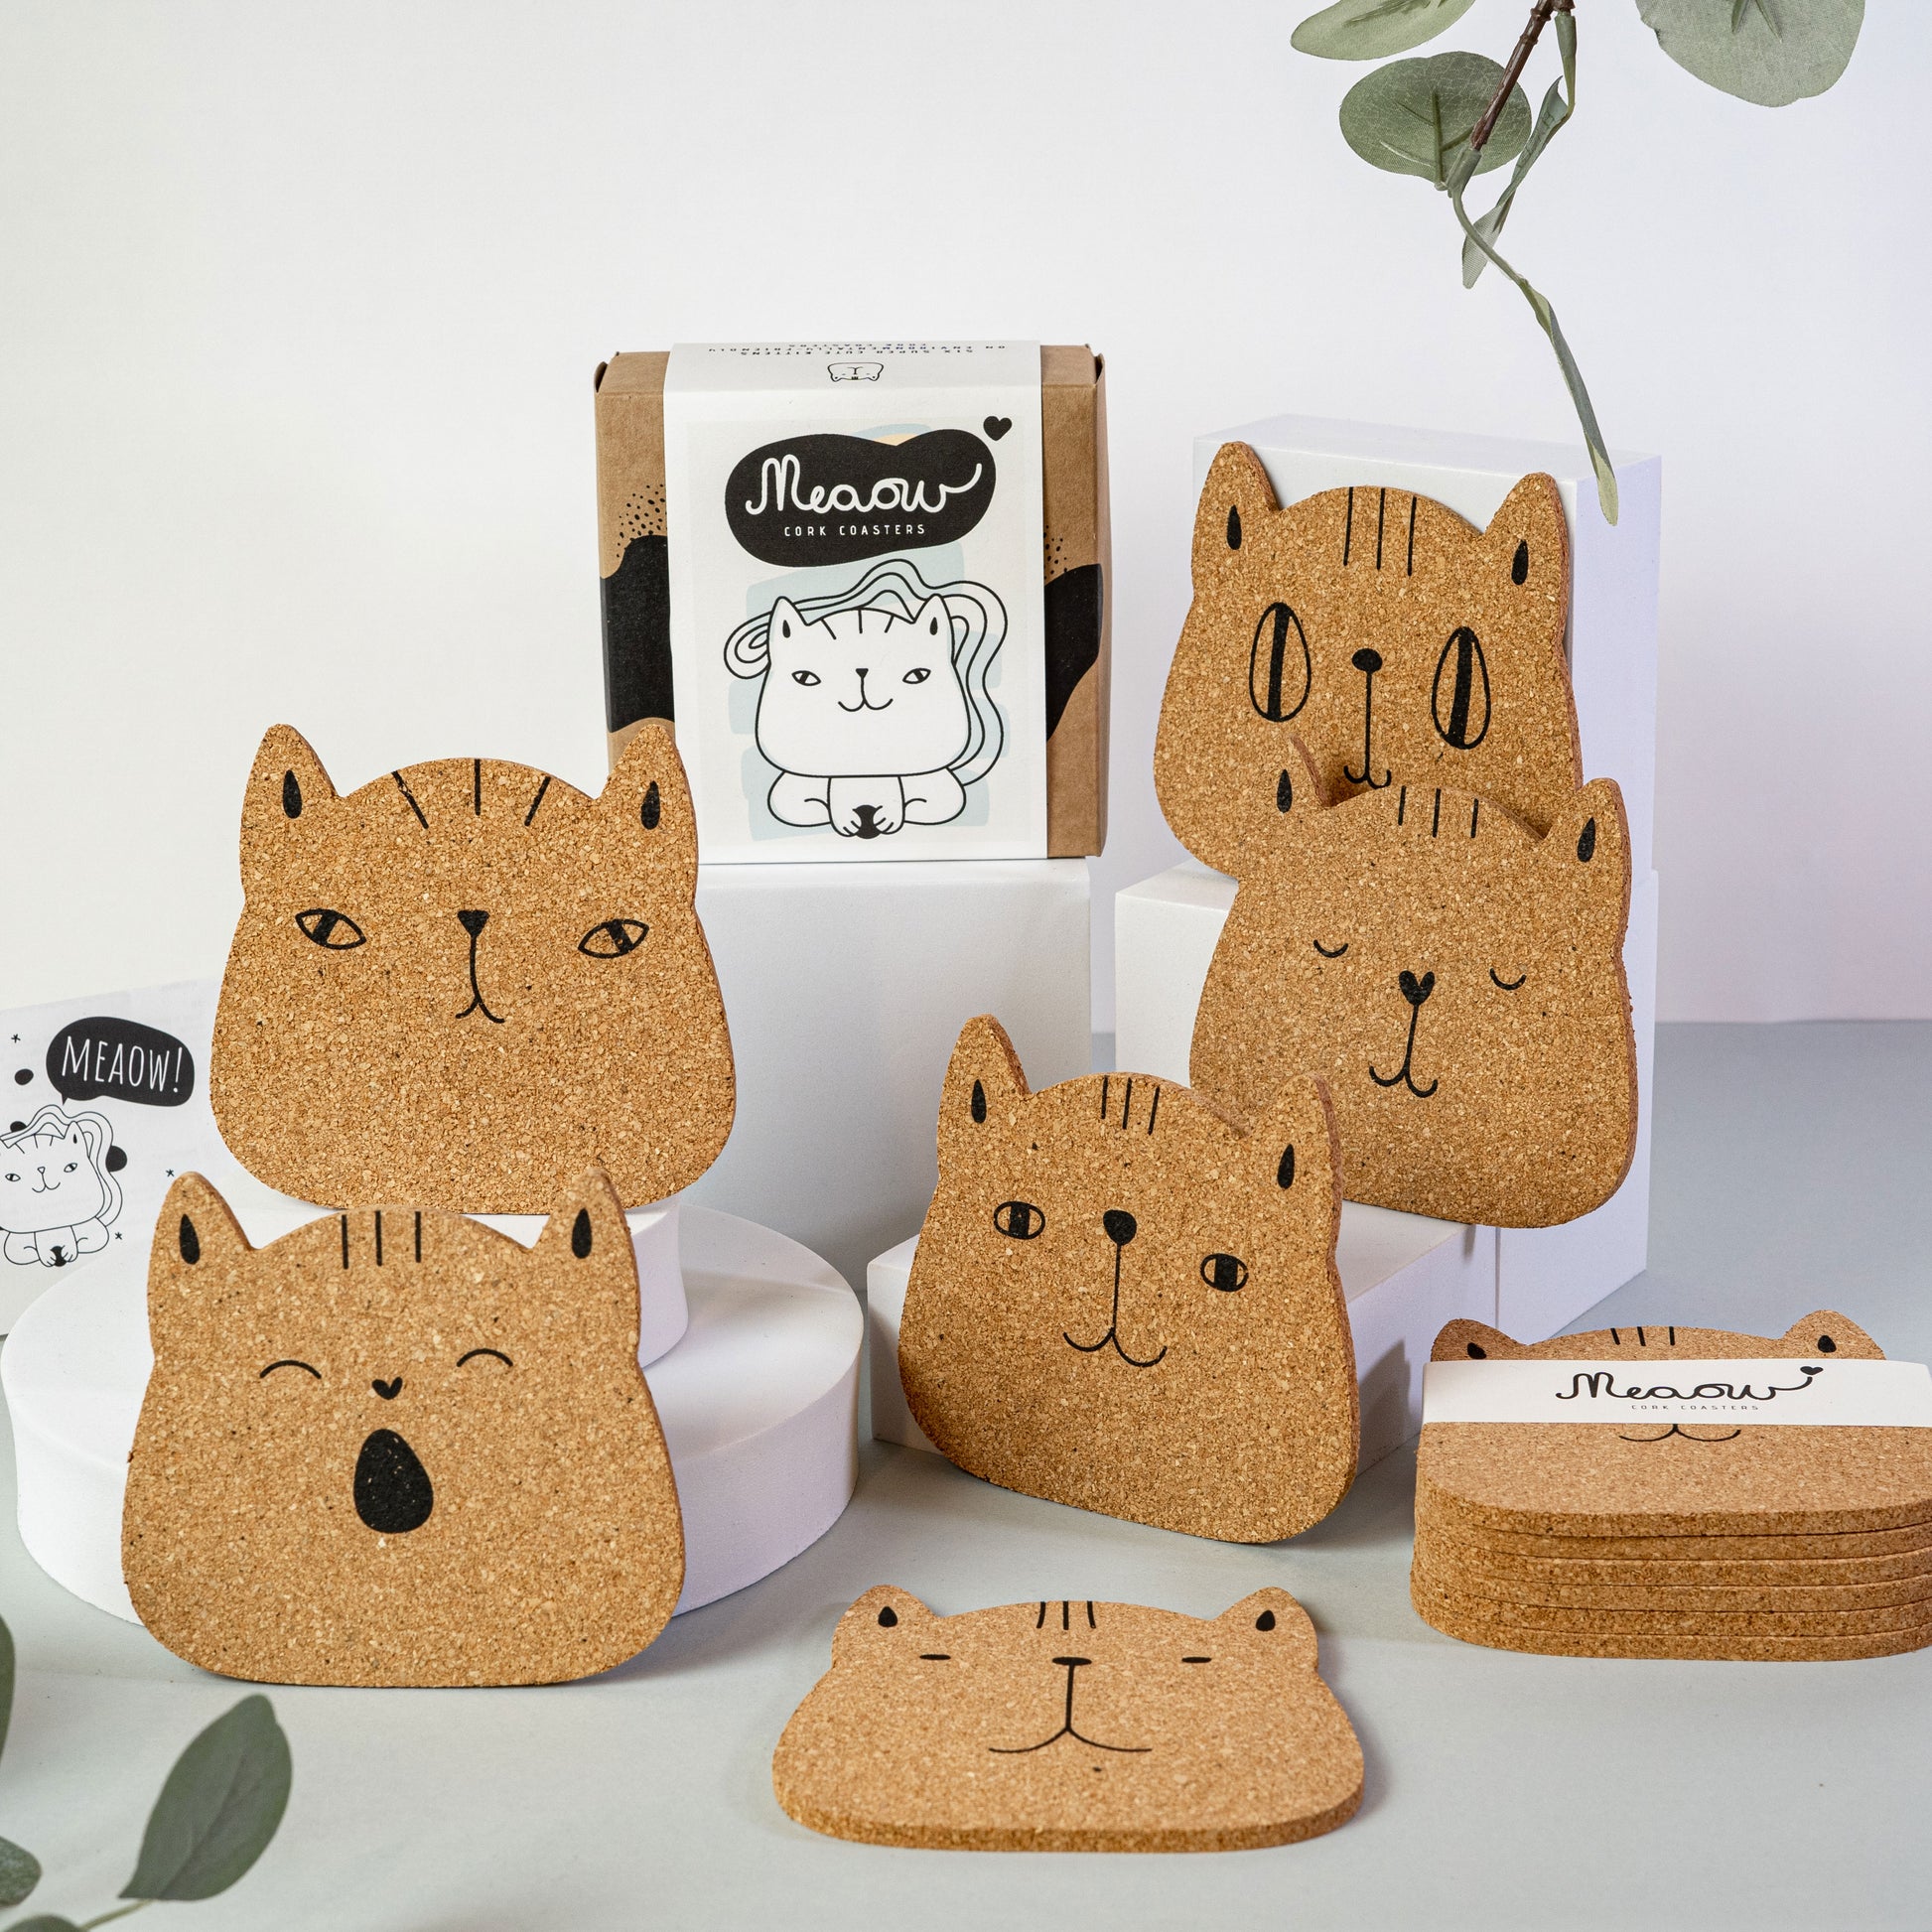 Cutes - Cork coasters, set of 6, cute animals – PepMelon